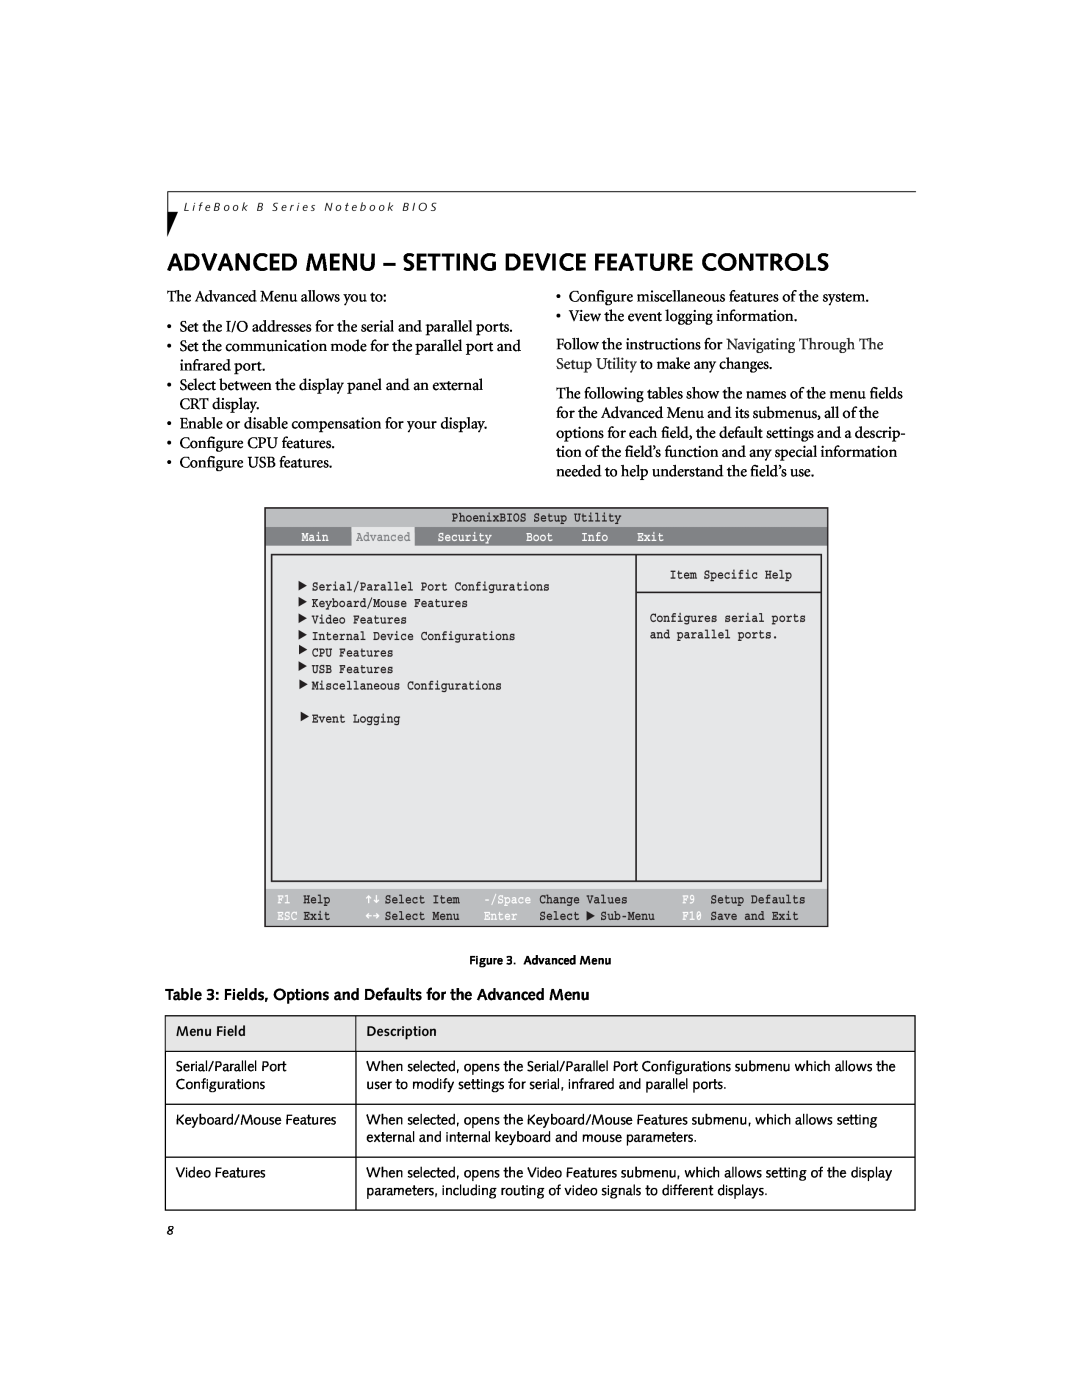 Fujitsu Siemens Computers B3000 manual Advanced Menu - Setting Device Feature Controls 